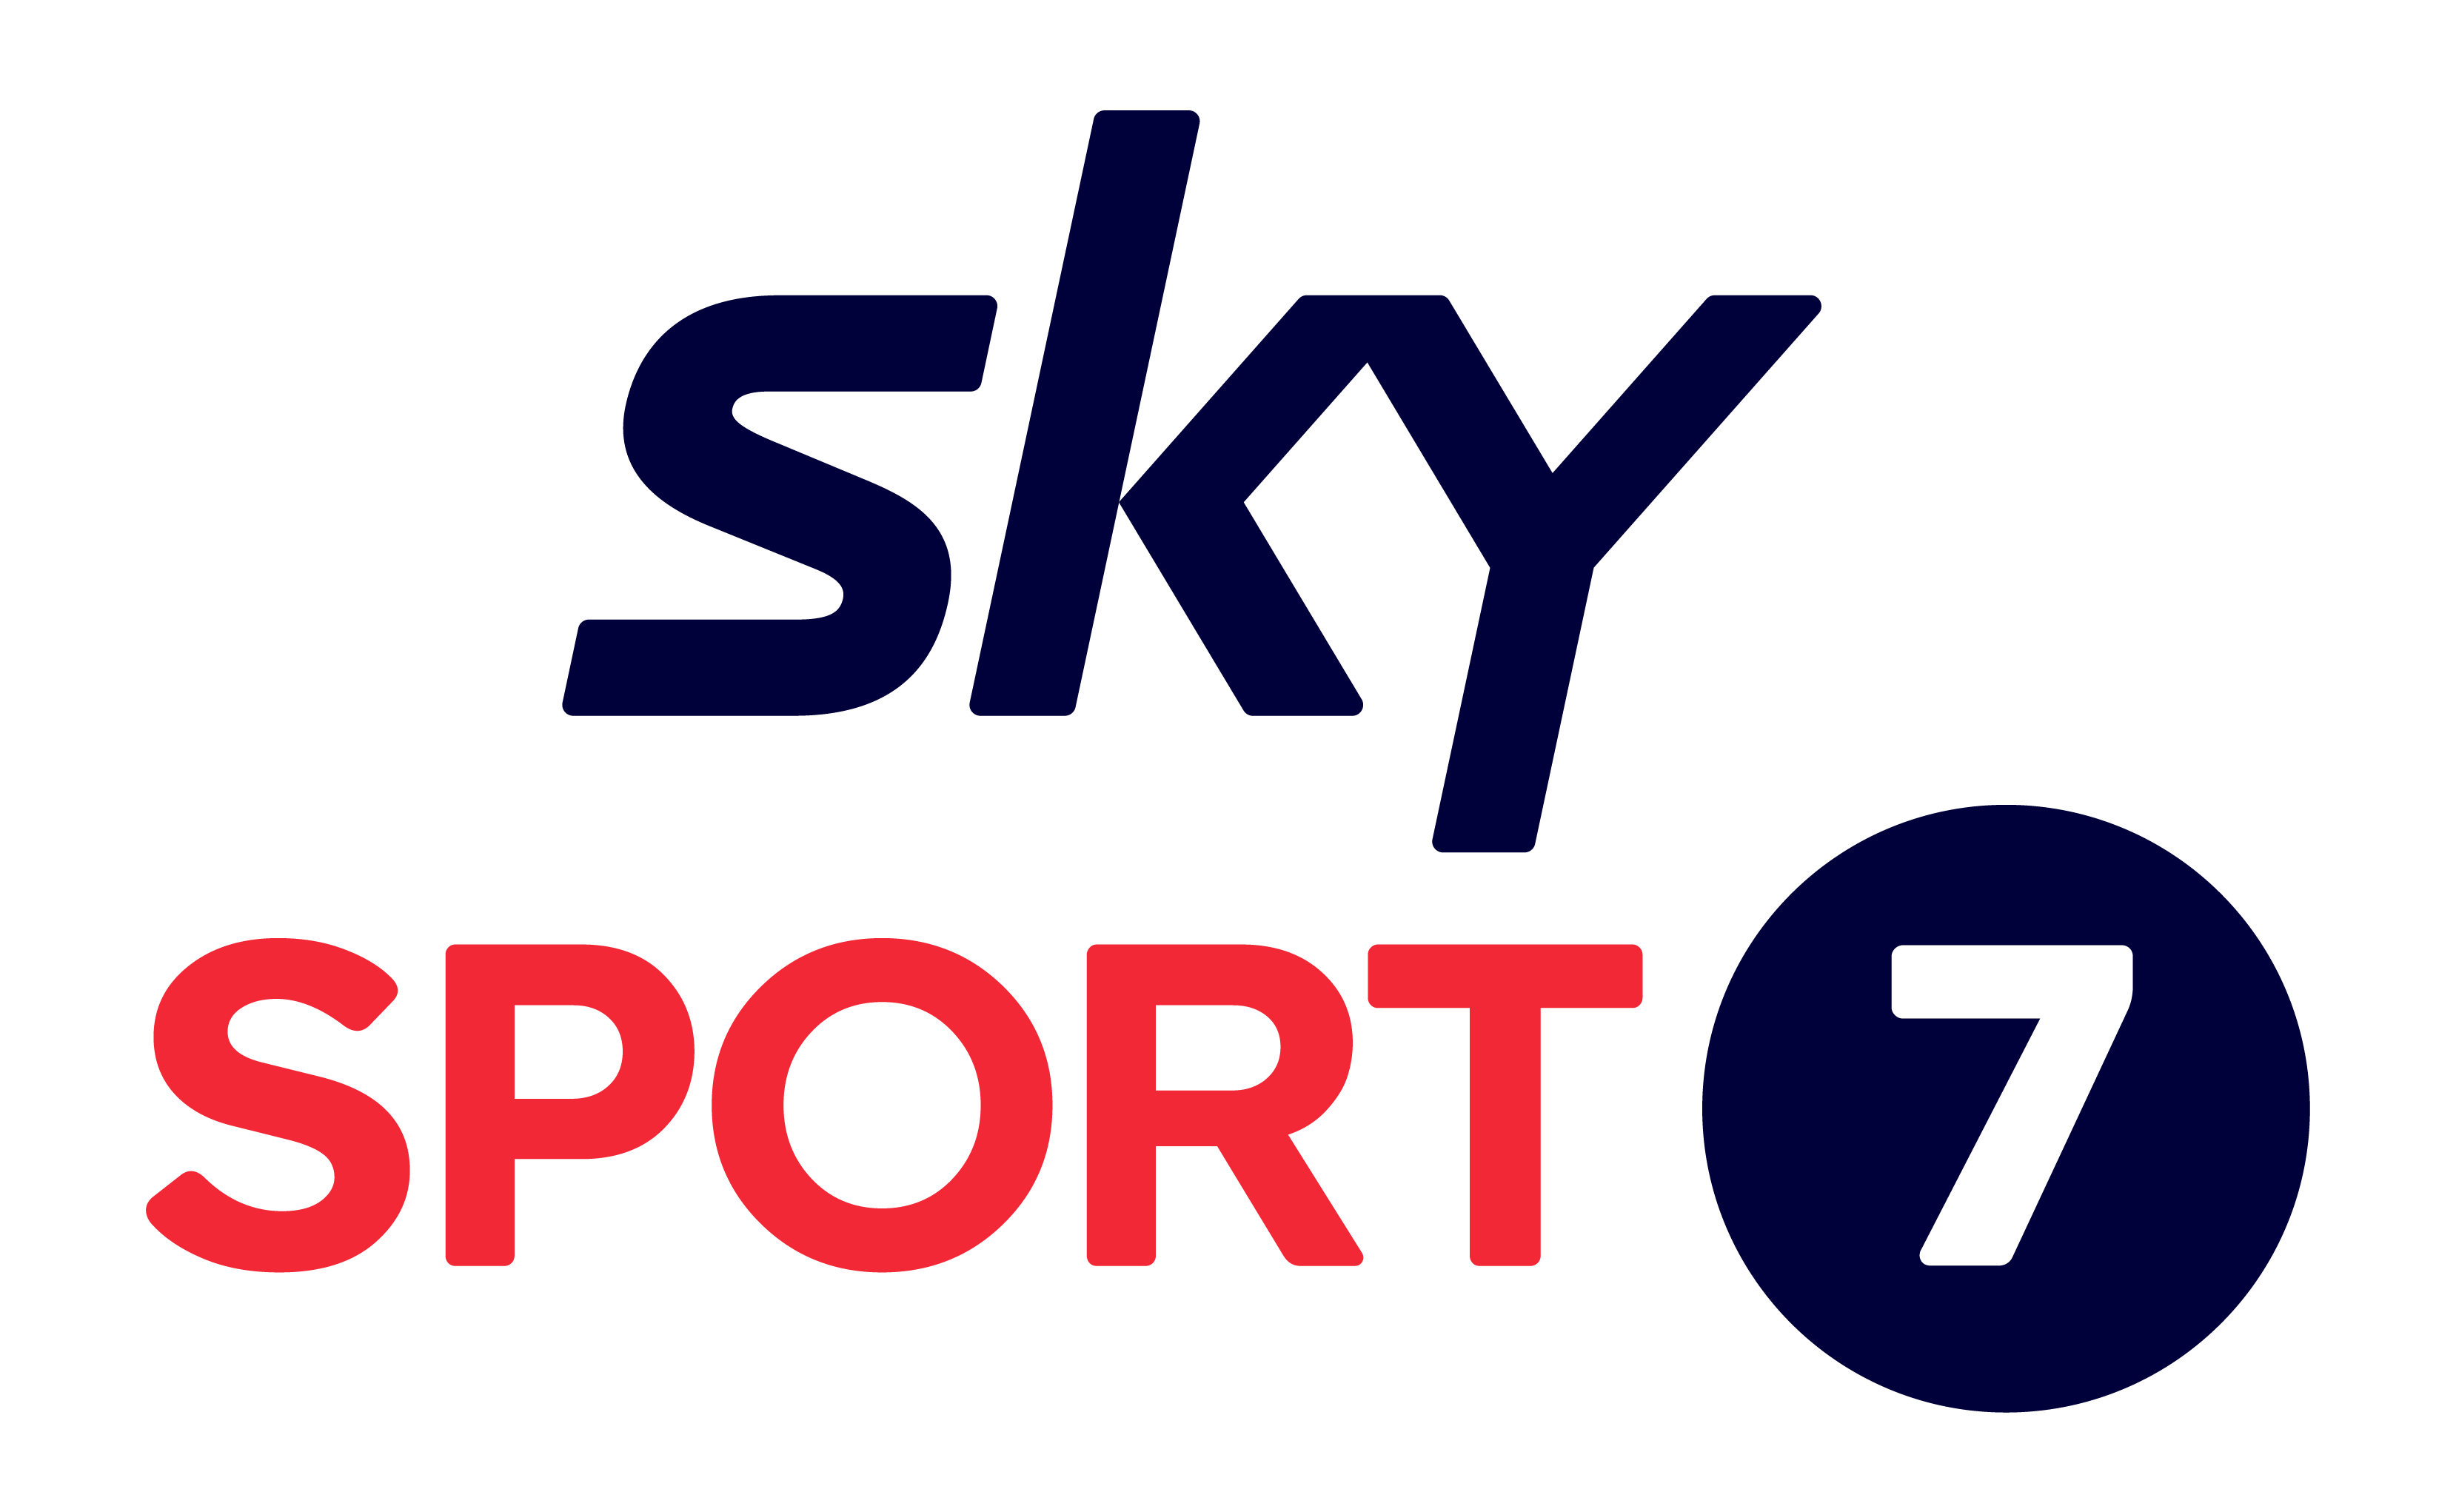 sky sport 7 live stream